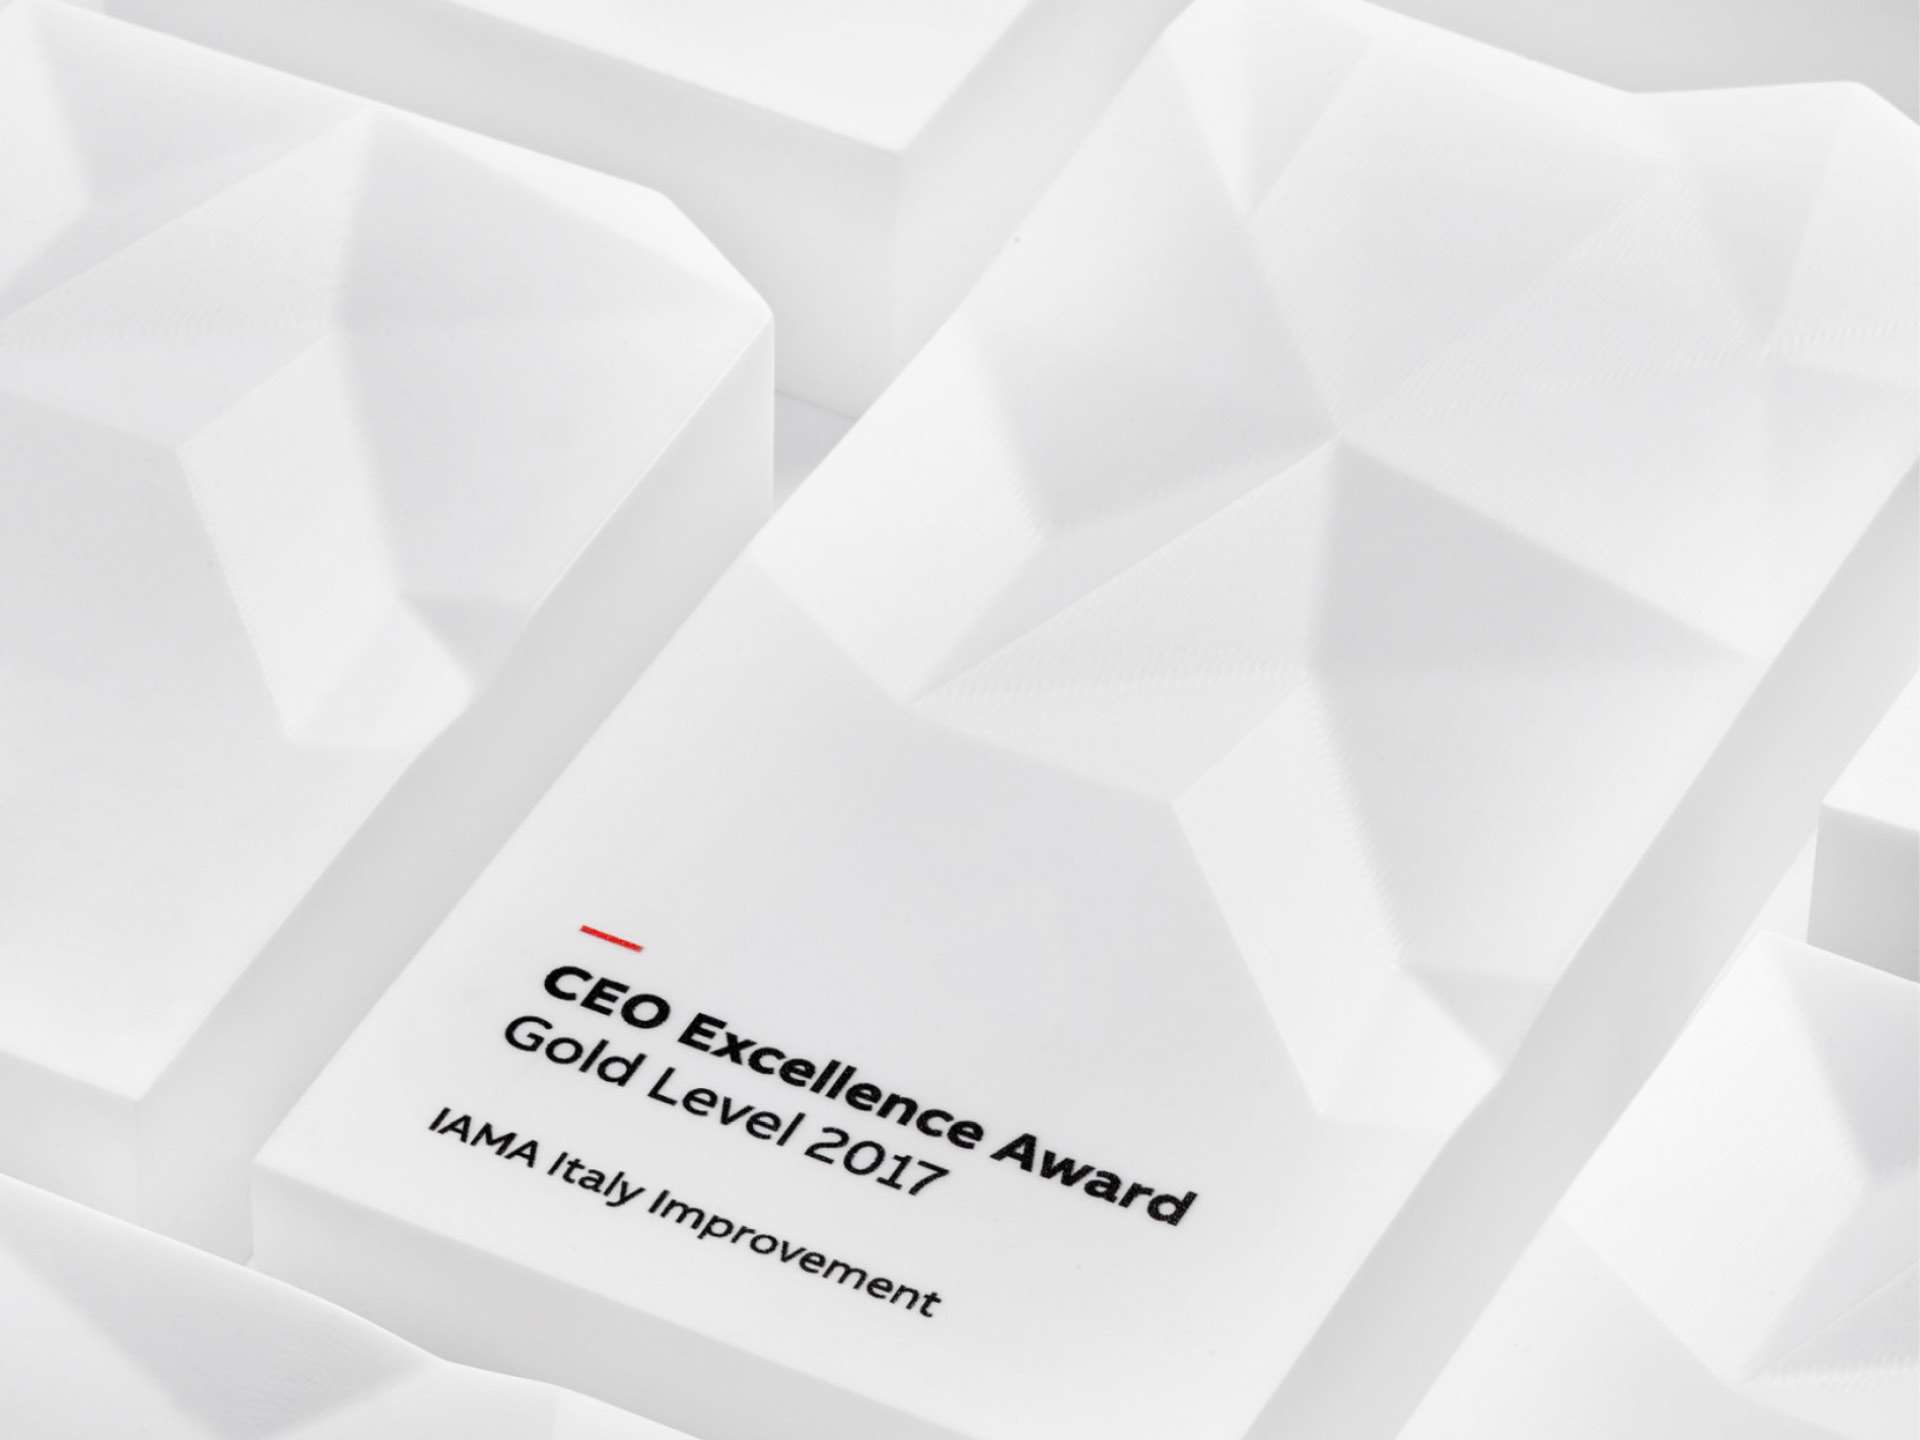 CEO Excellence Award
Gold Level 2017